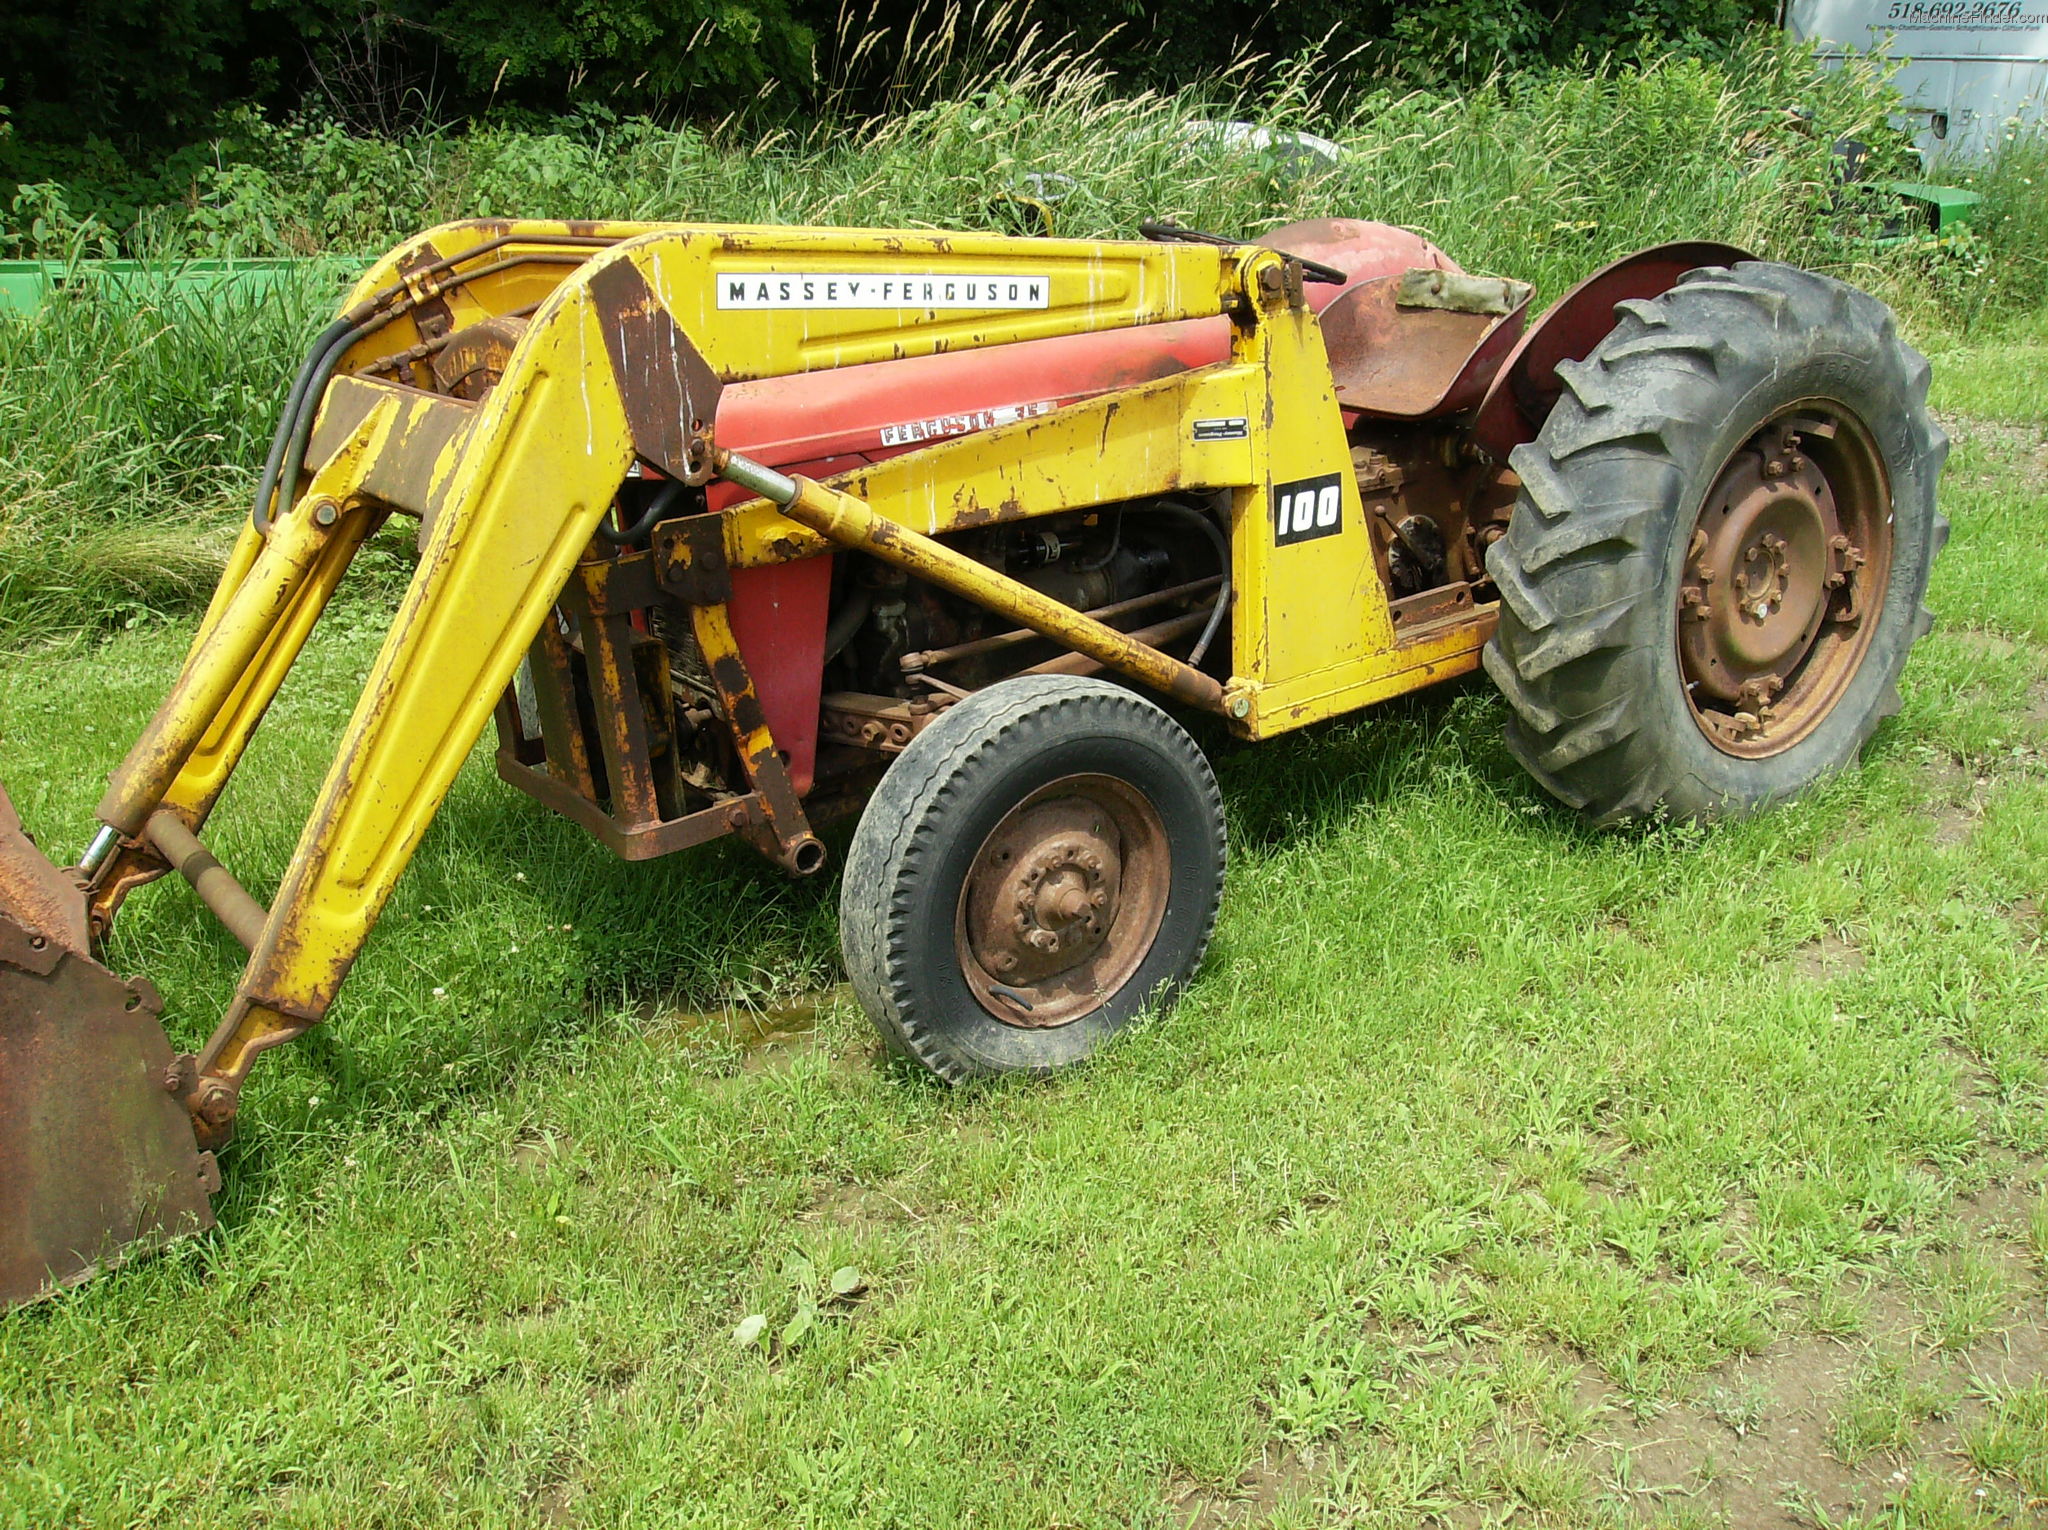 Massey Ferguson T035 Tractors Utility 40 100hp John Deere Machinefinder 0559